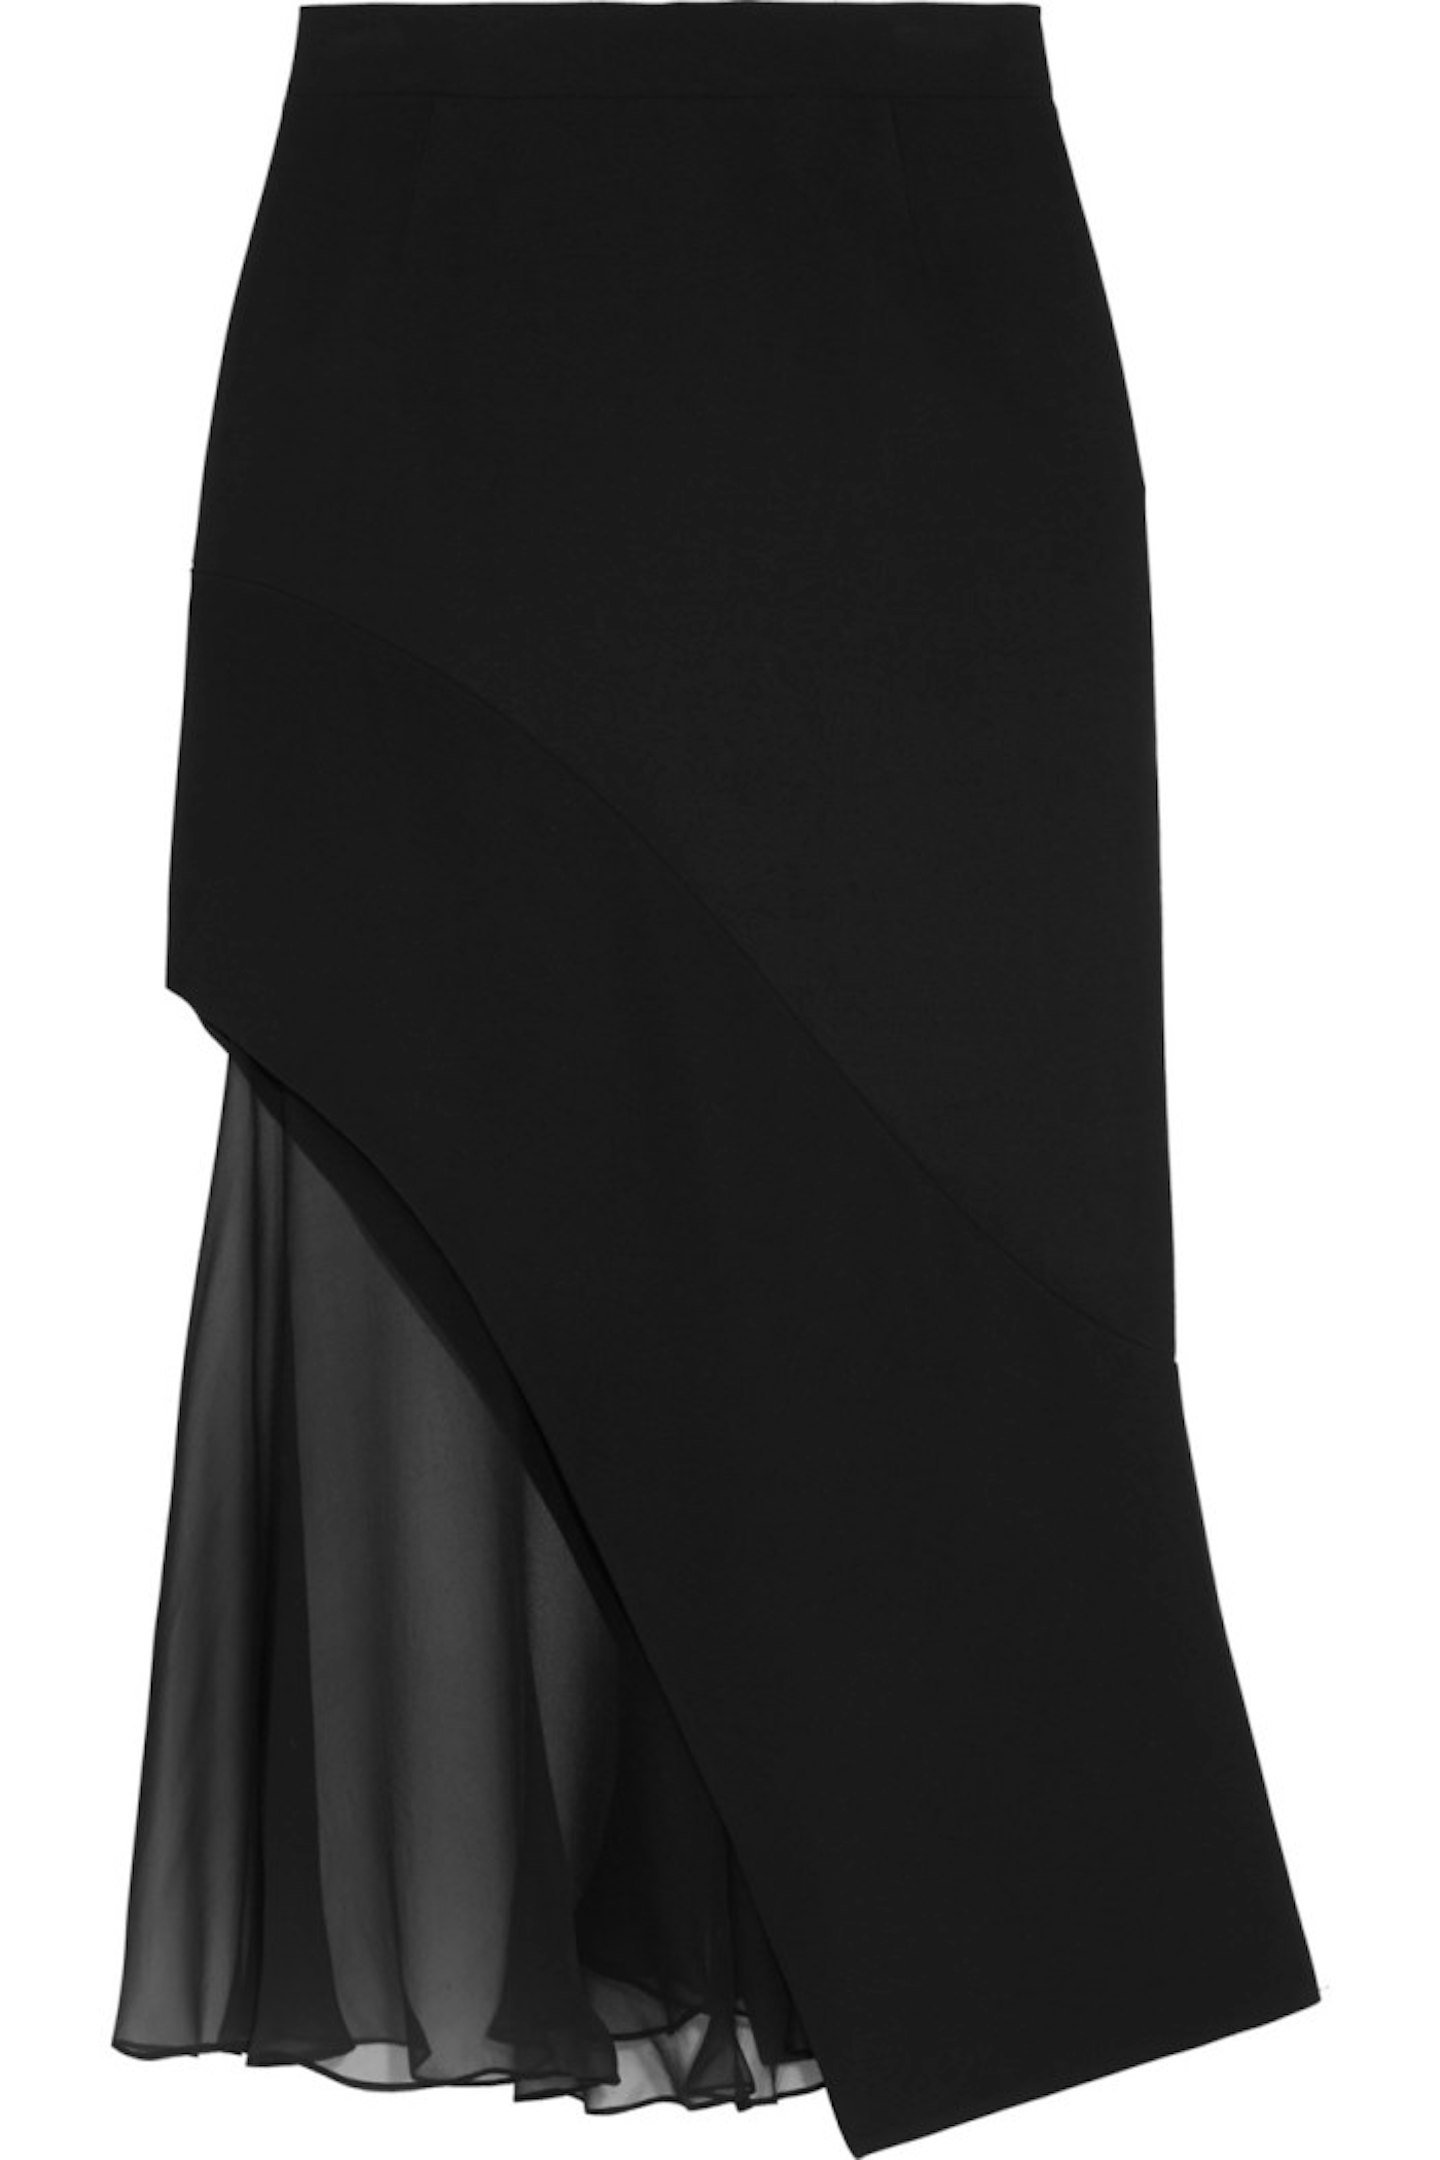 Givenchy Midi Chiffon and Silk Skirt, £1,440.00